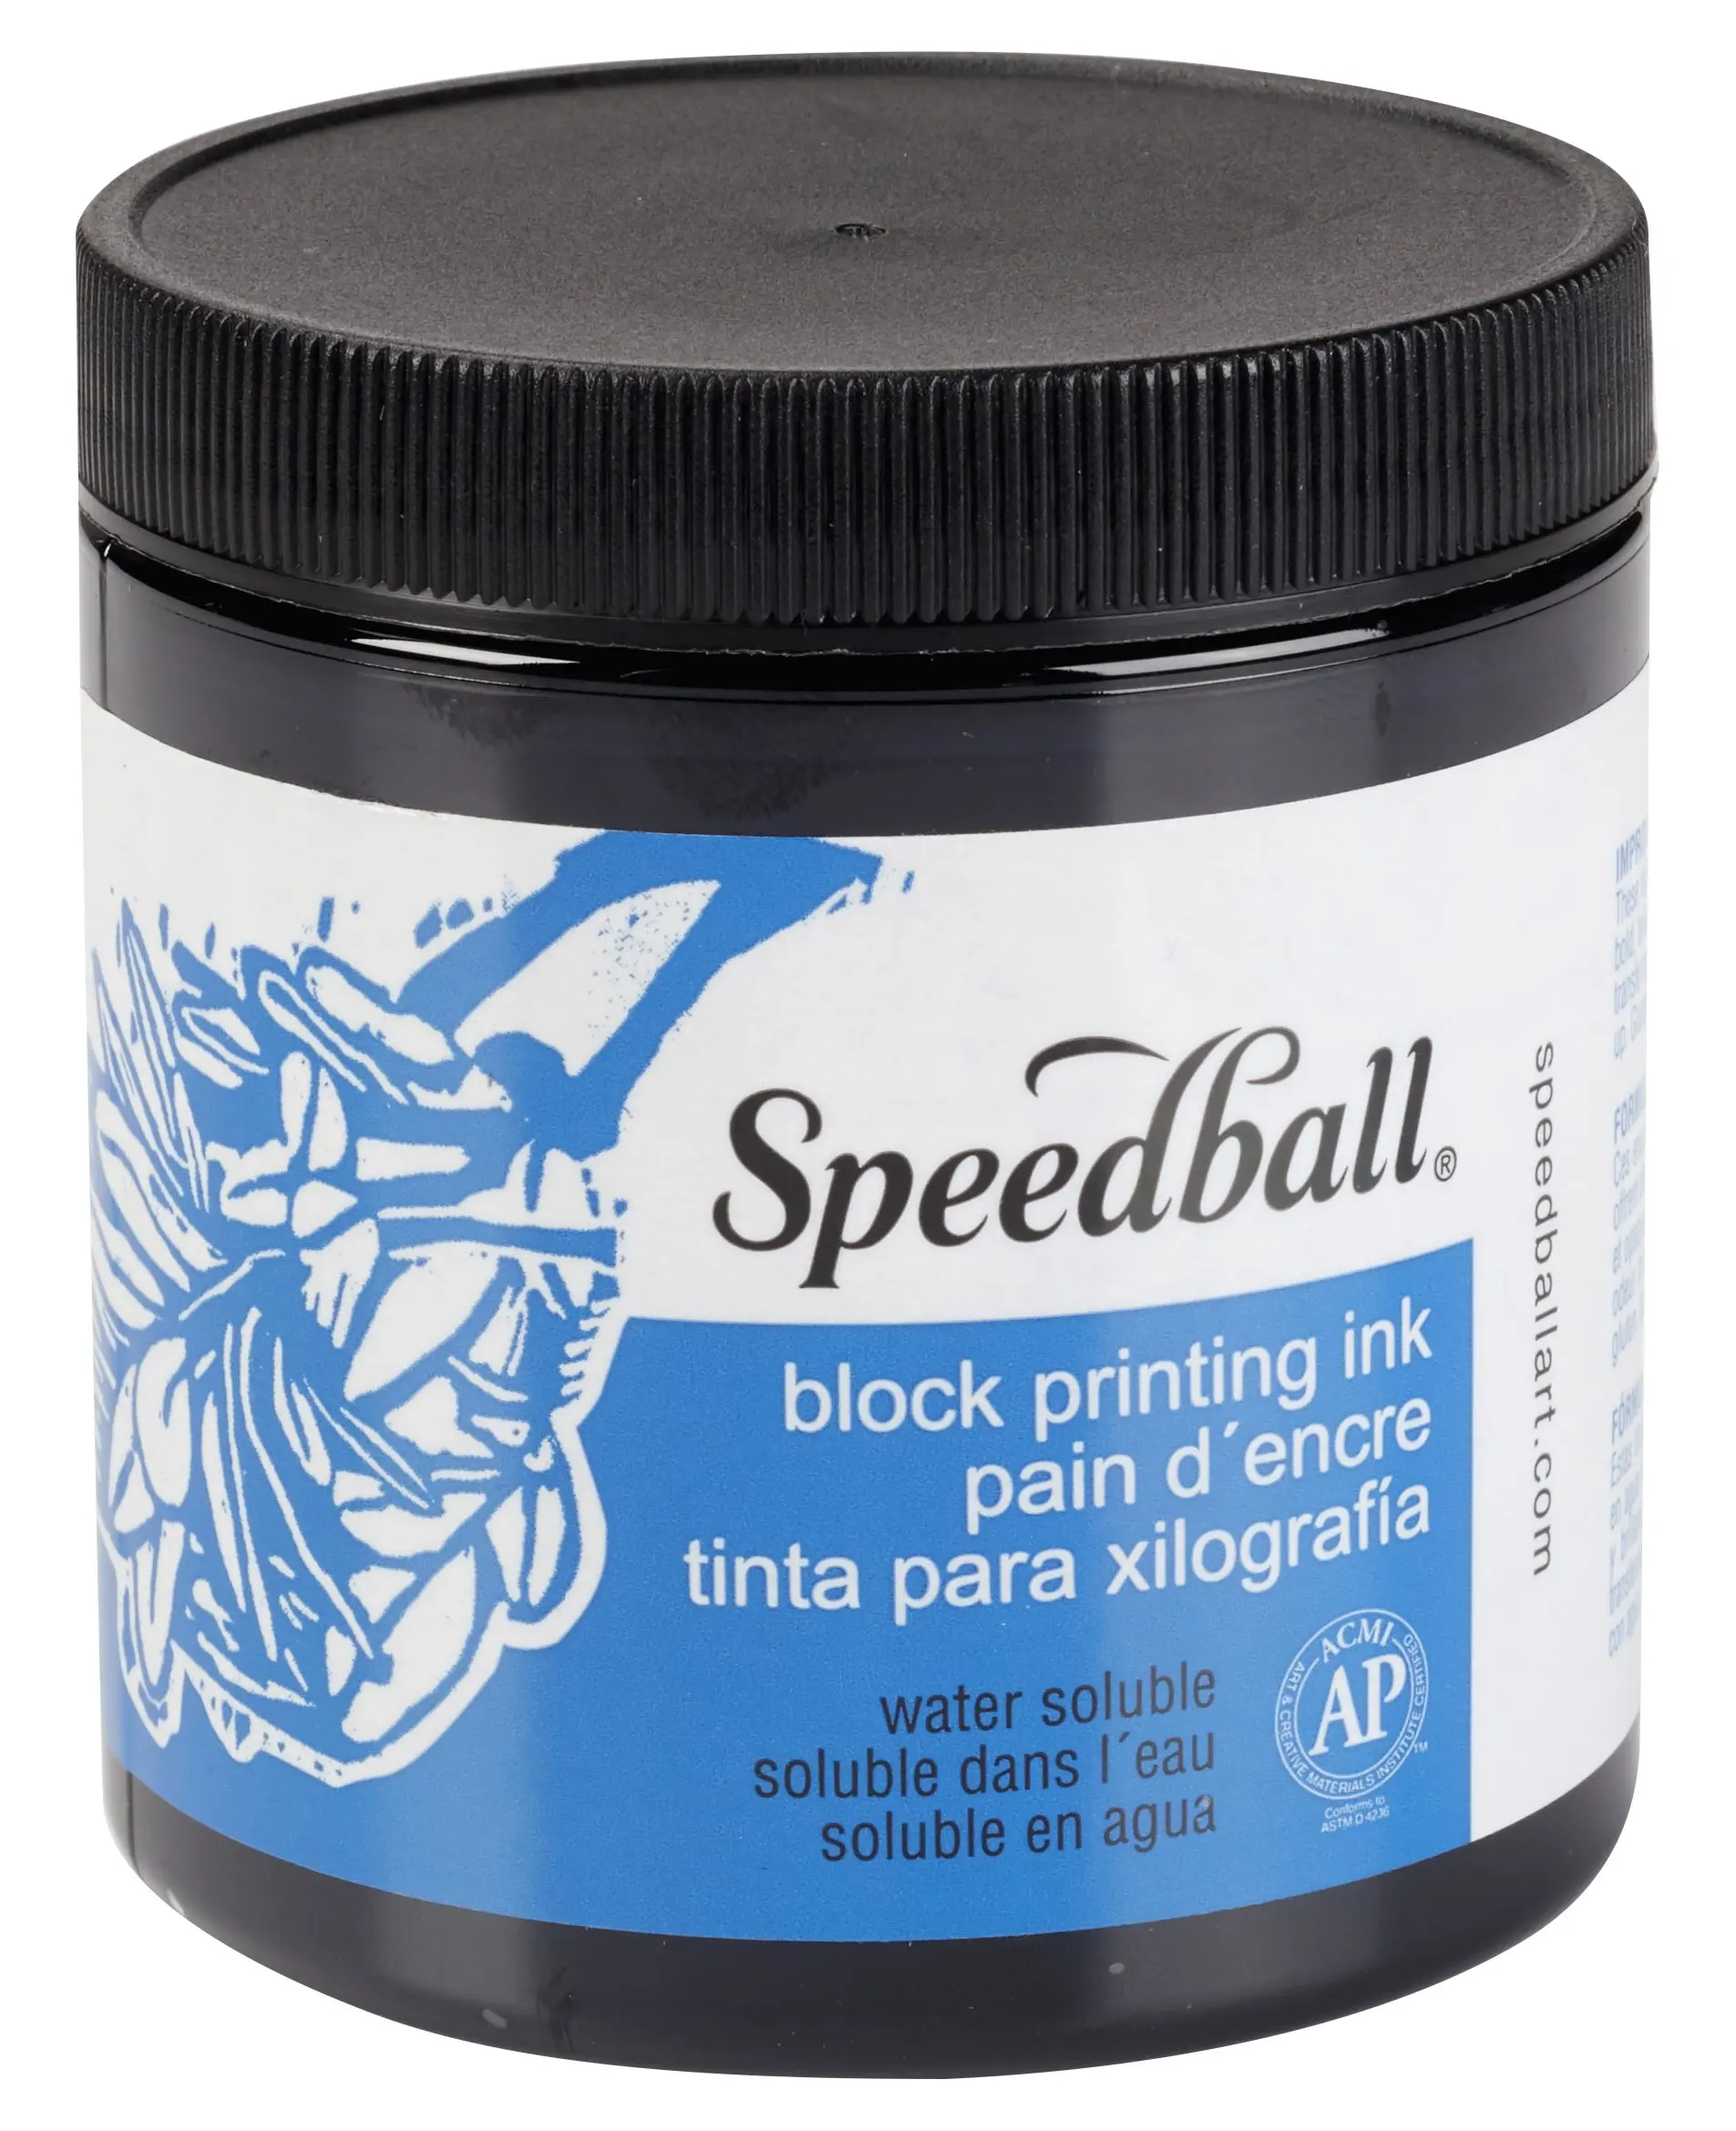 speedball india ink poisoning